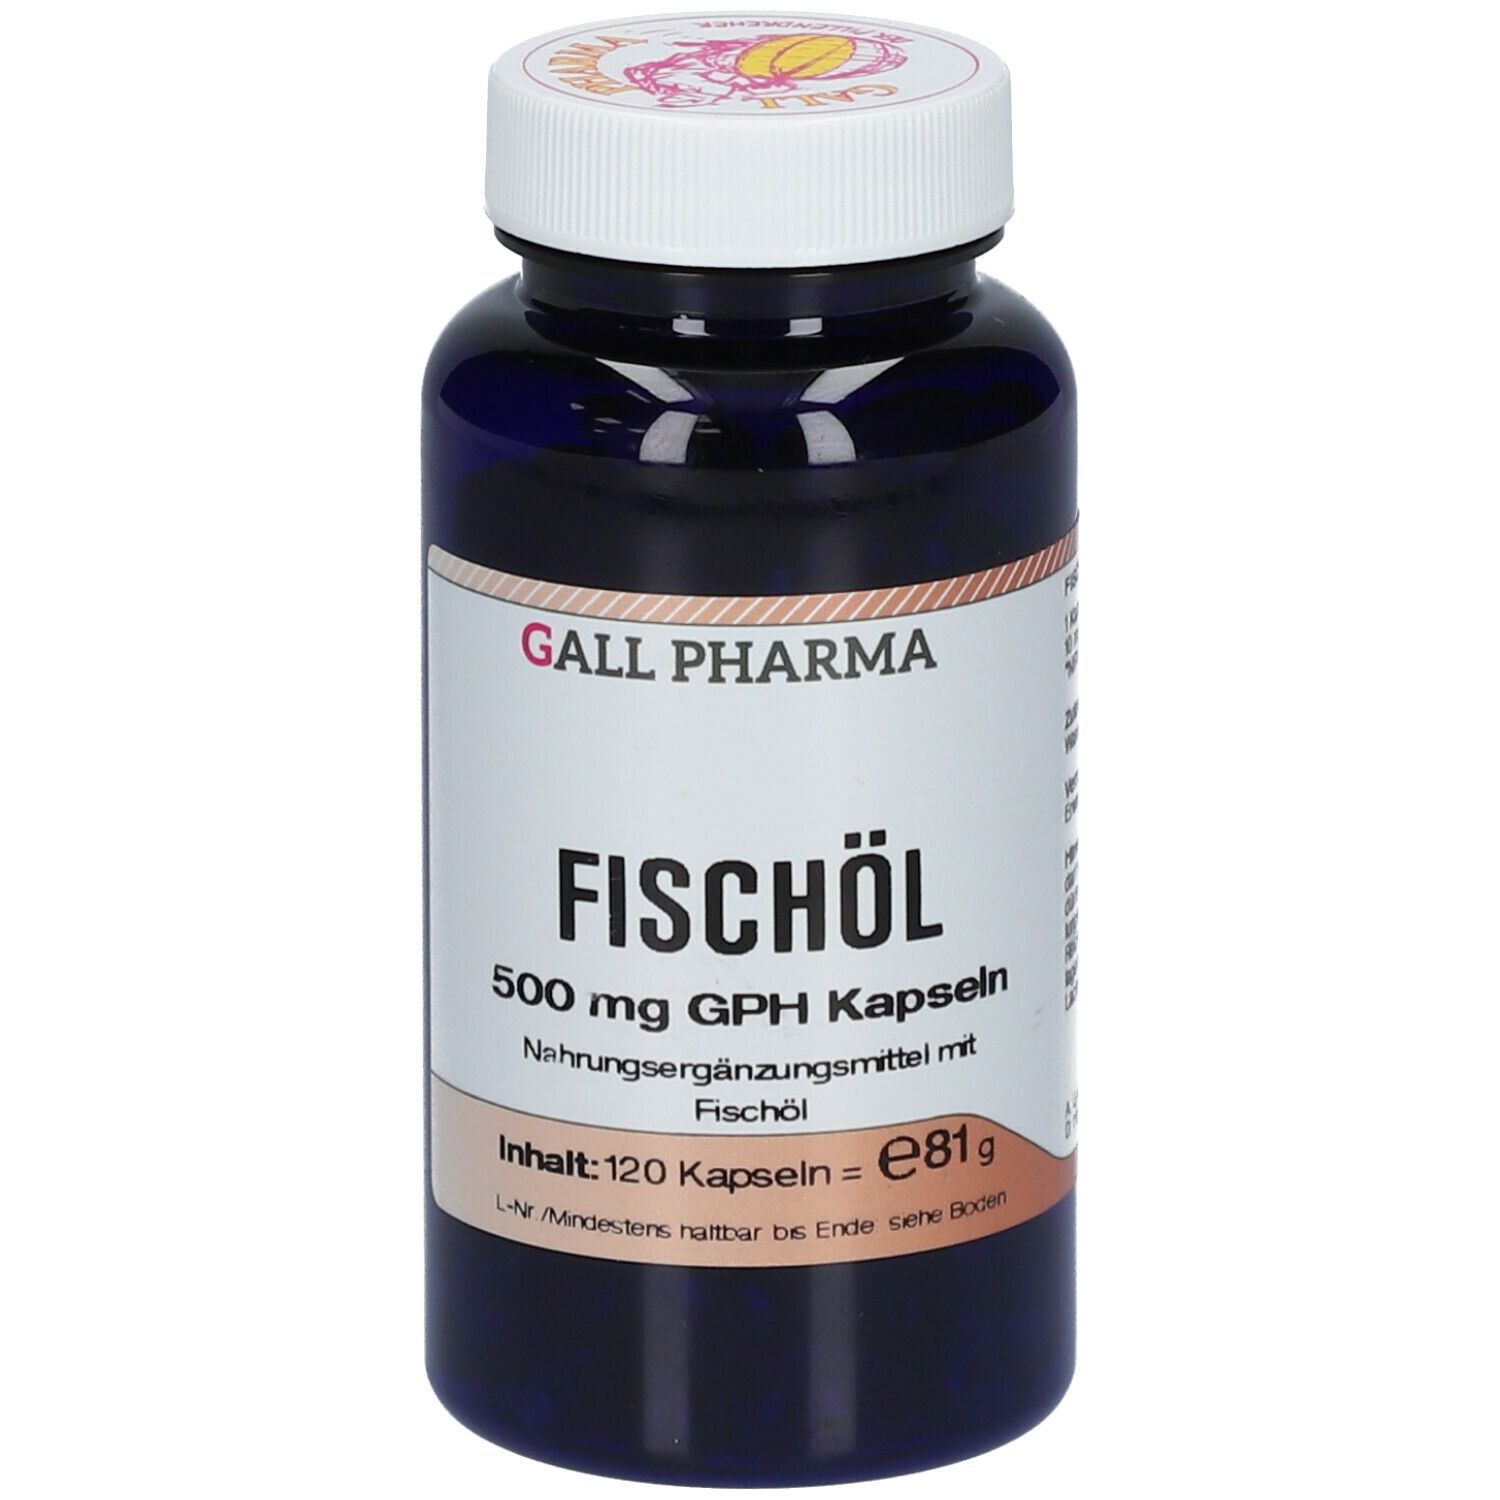 Image of GALL PHARMA Fischöl 500 mg GPH Kapseln